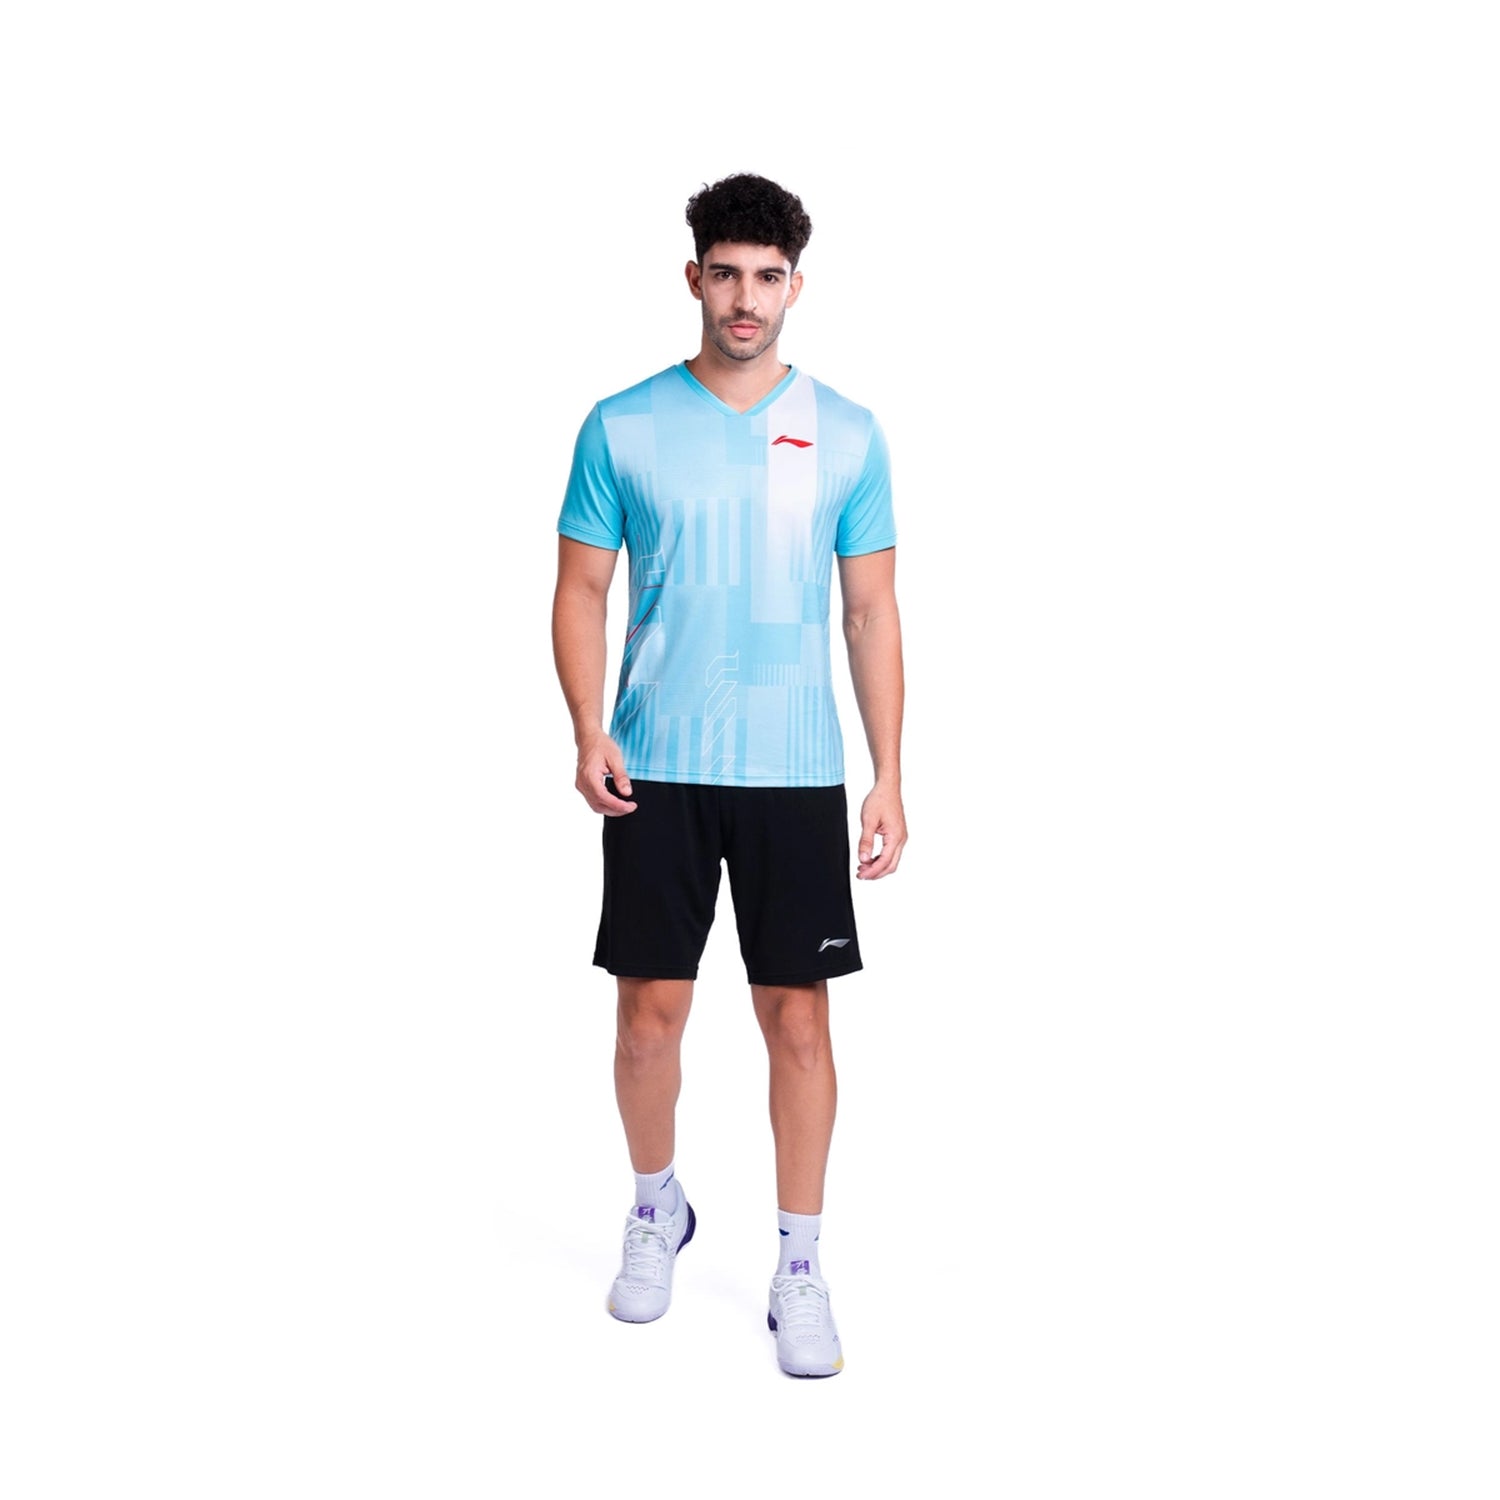 Li-Ning ATST965 Men's V-Neck Badminton T-shirt - Best Price online Prokicksports.com